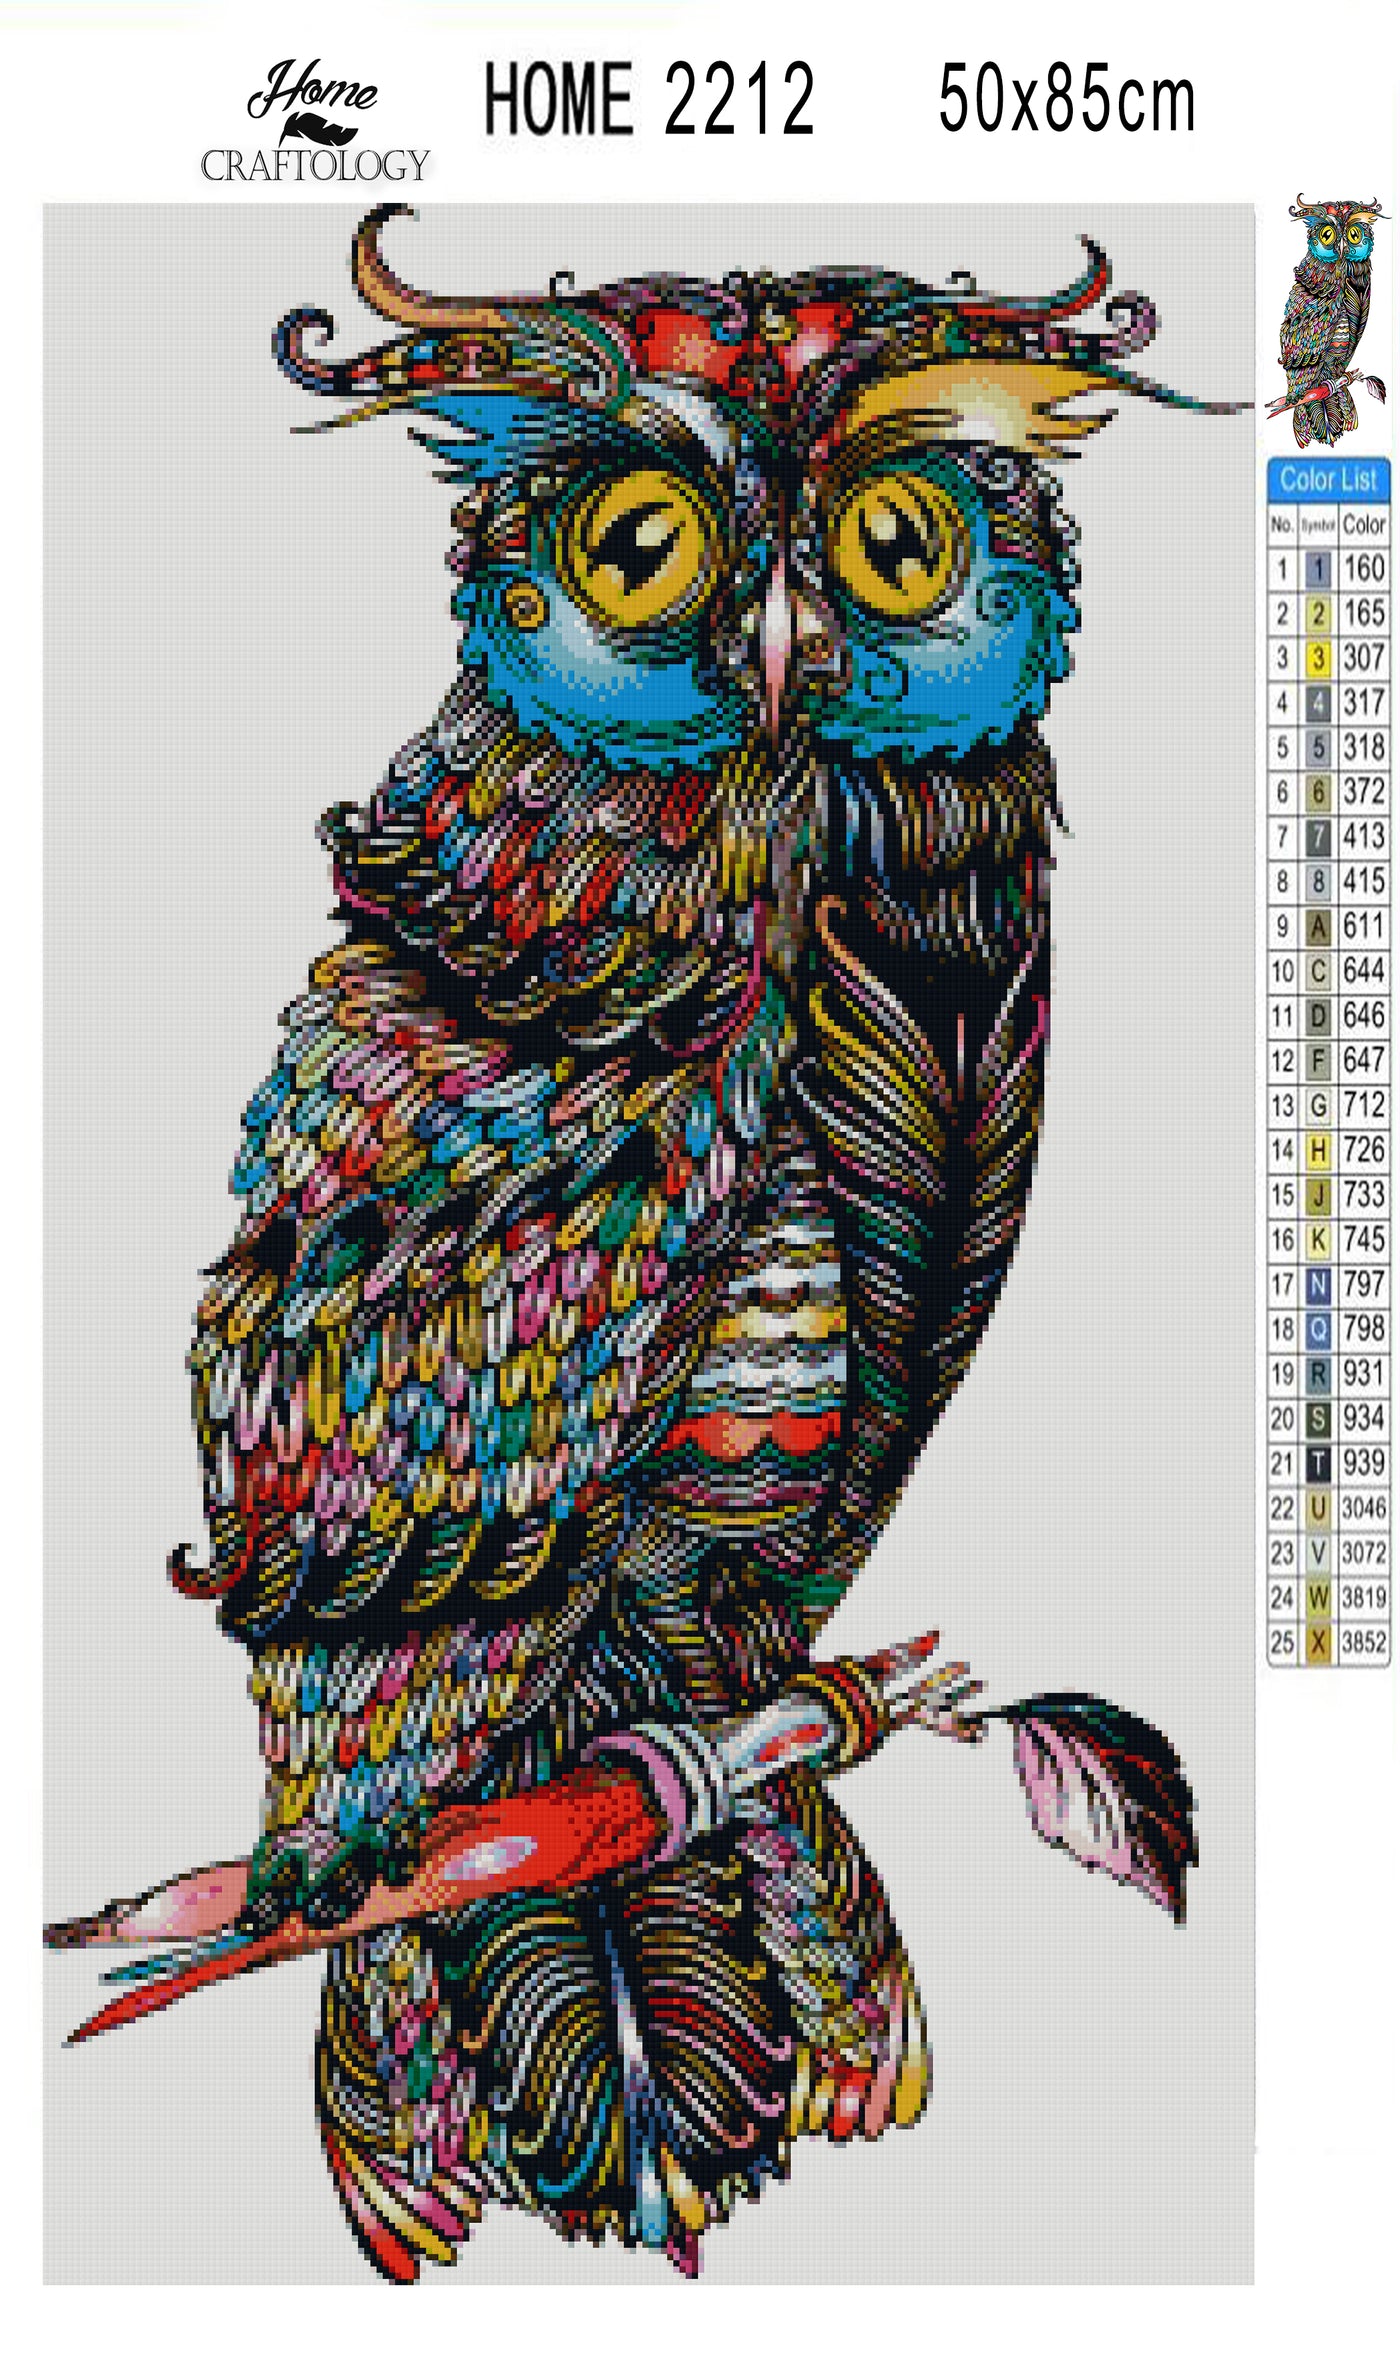 Owl on a Branch - Premium Diamond Painting Kit